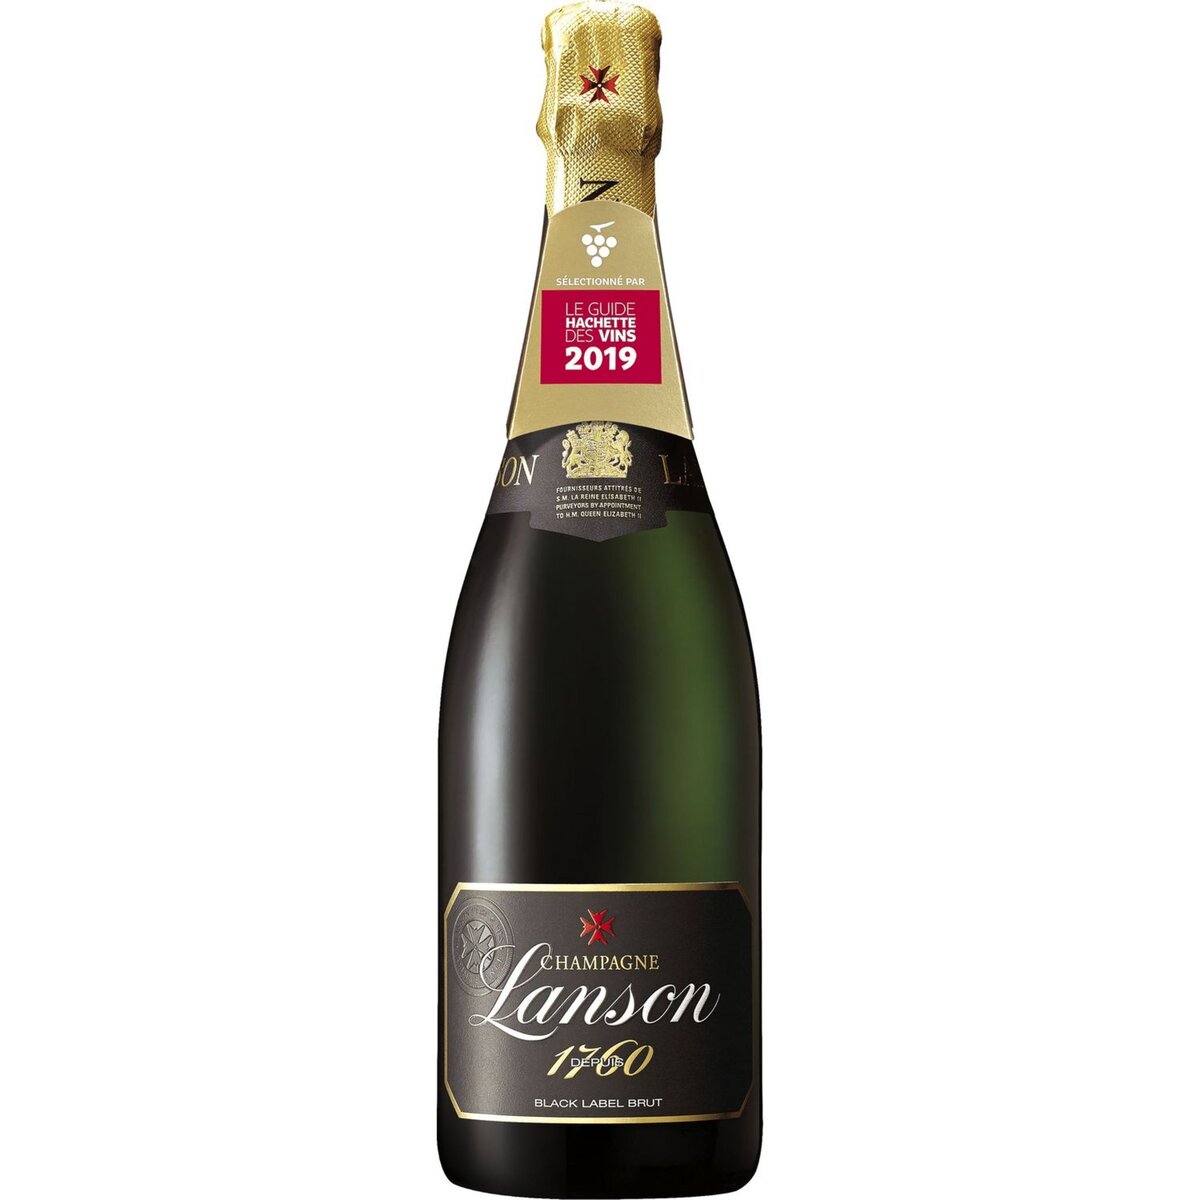 LANSON AOP Champagne brut black label 176 75cl